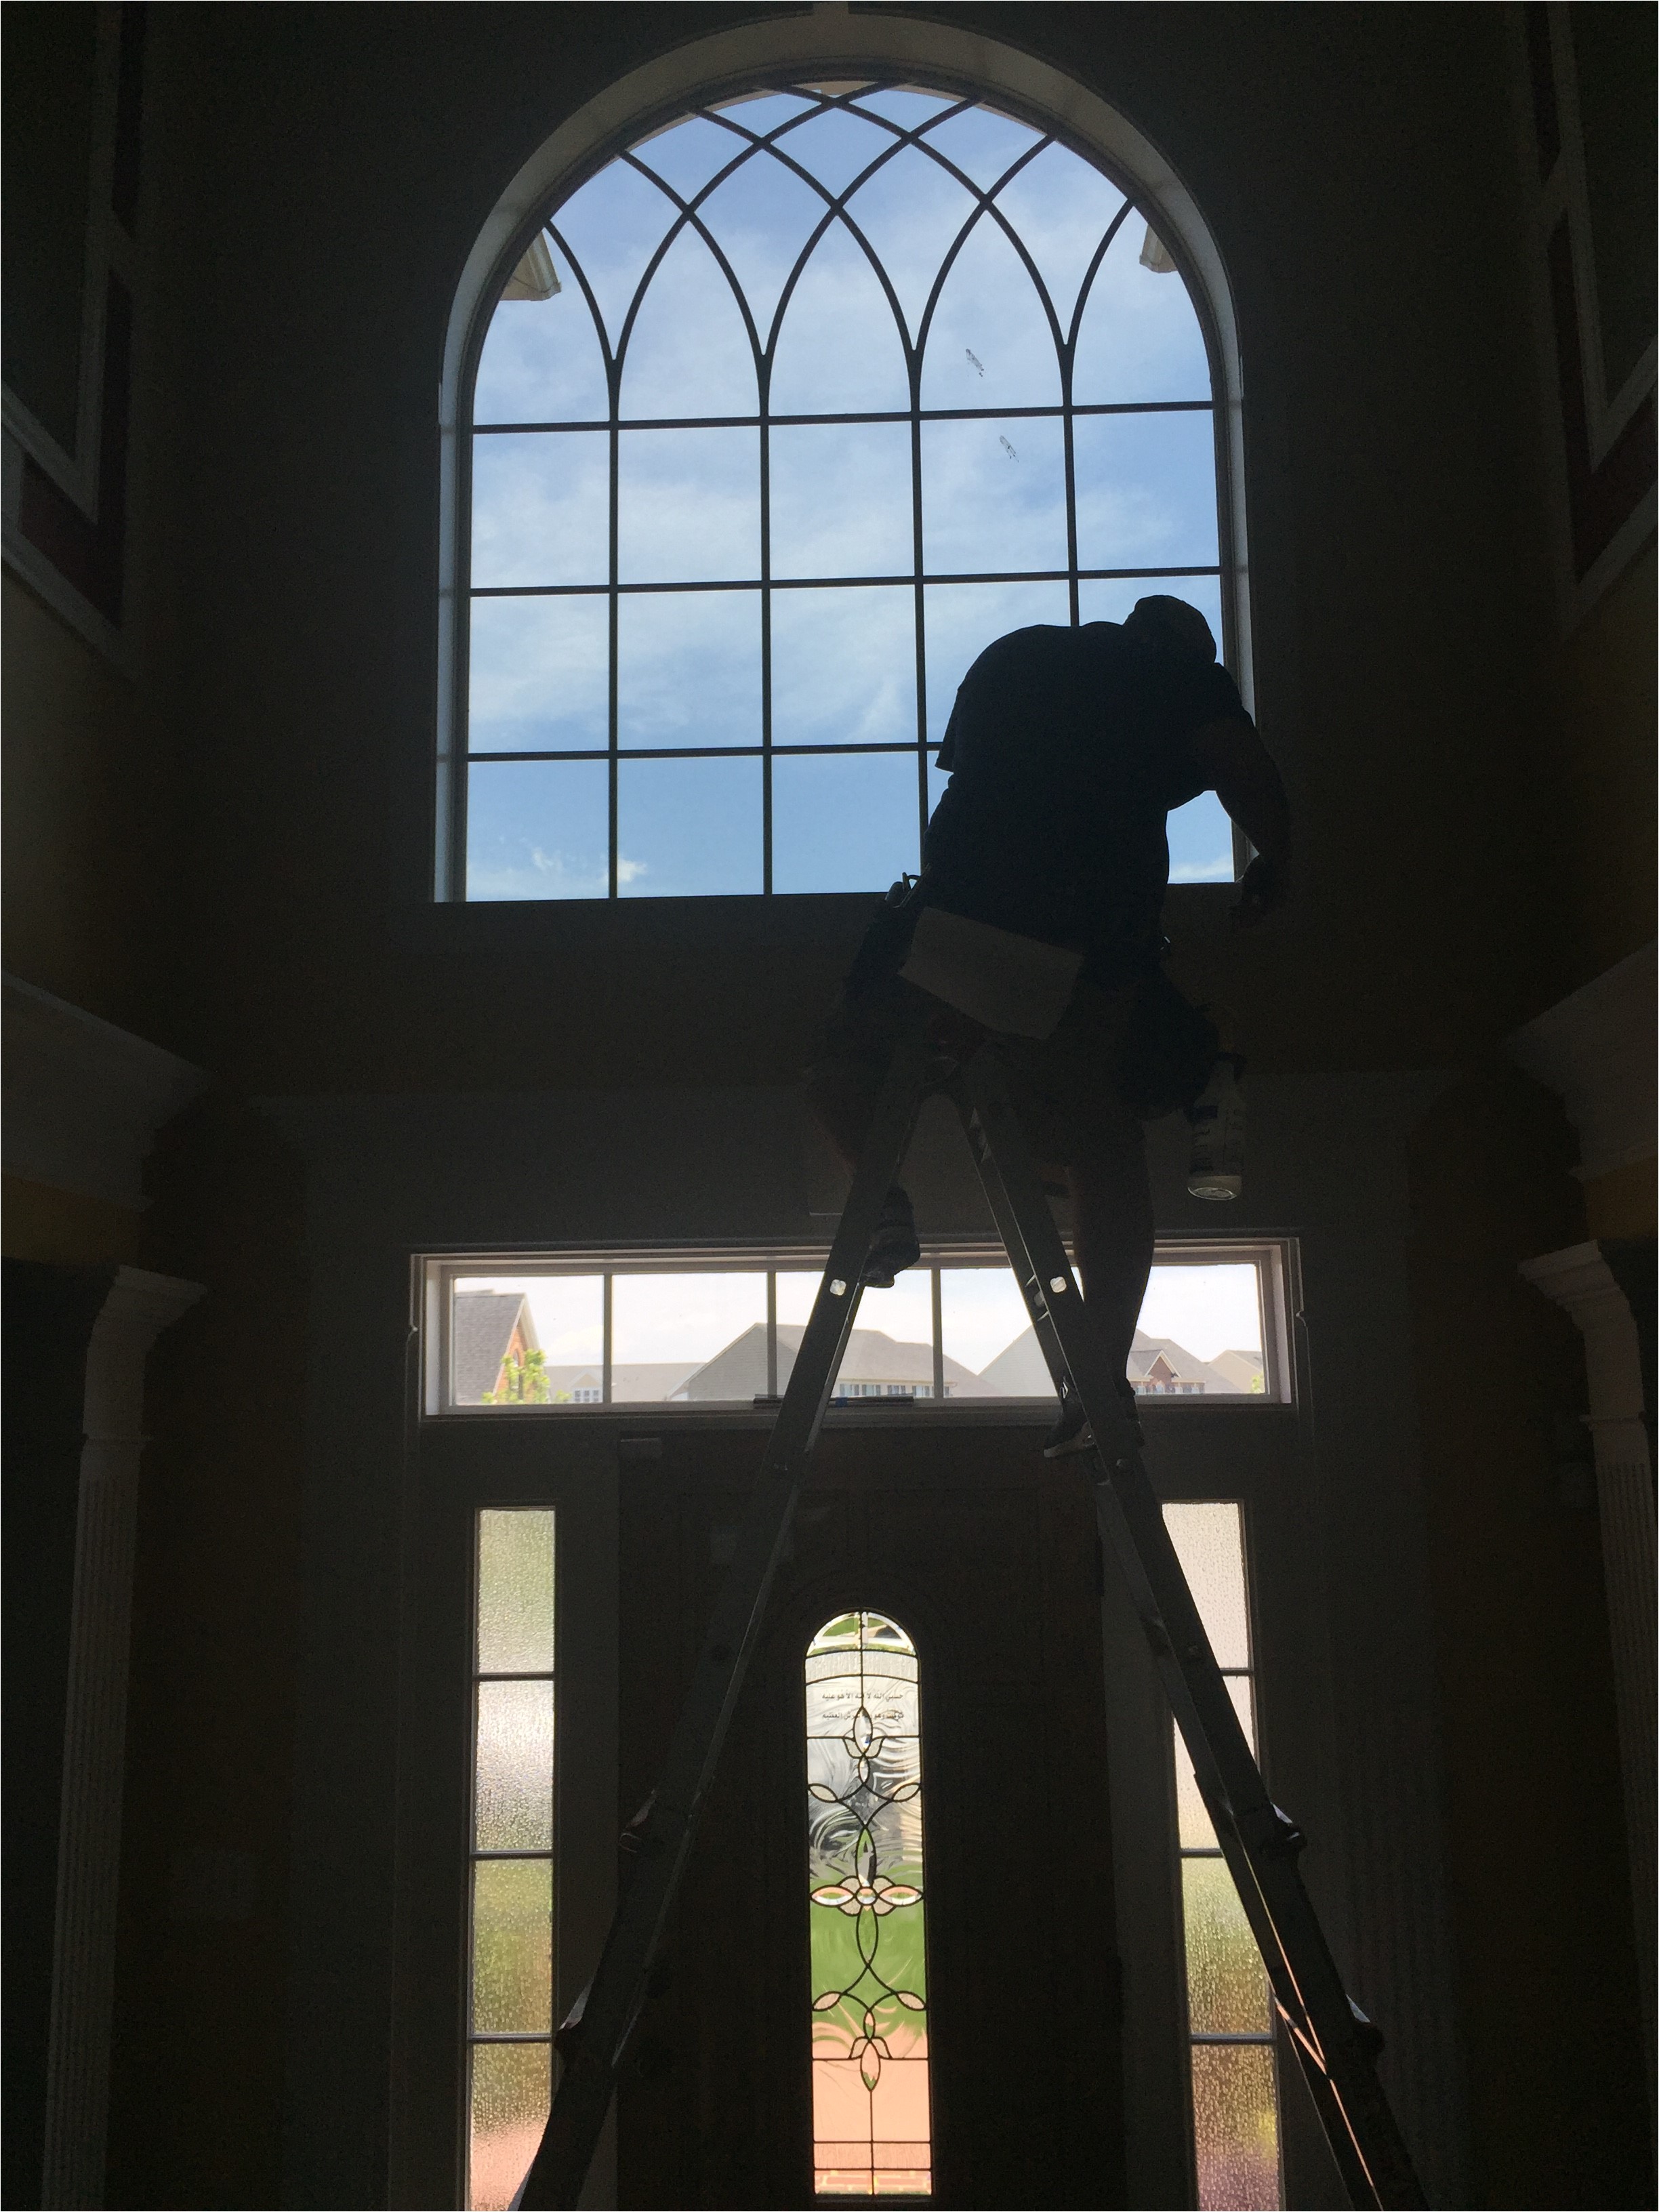 laurel md solar privacy window tinting installation for home w palladium window